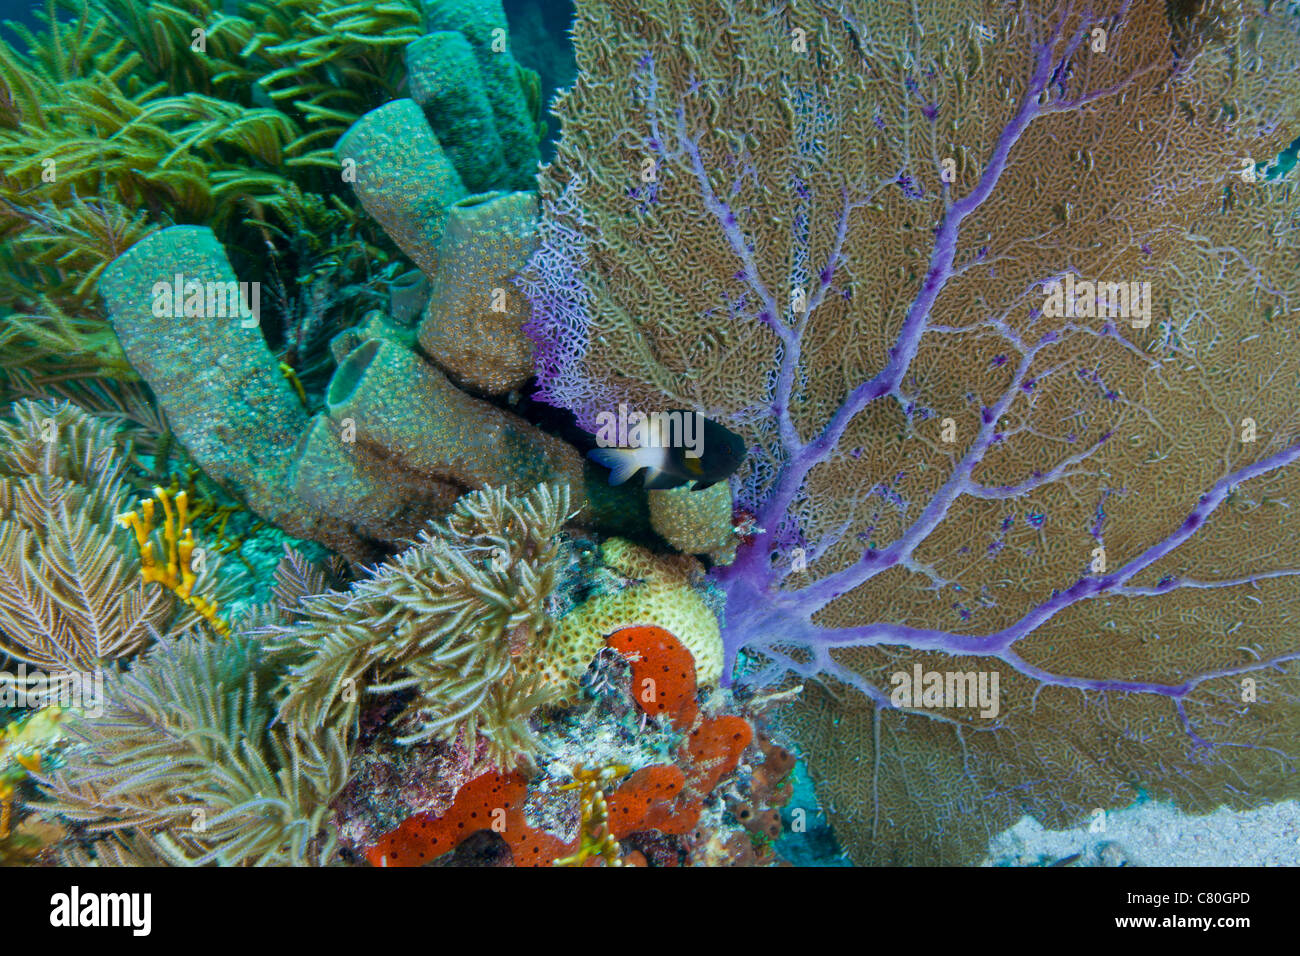 A bi-color damselfish amongst the coral reef, Key Largo, Florida. Stock Photo